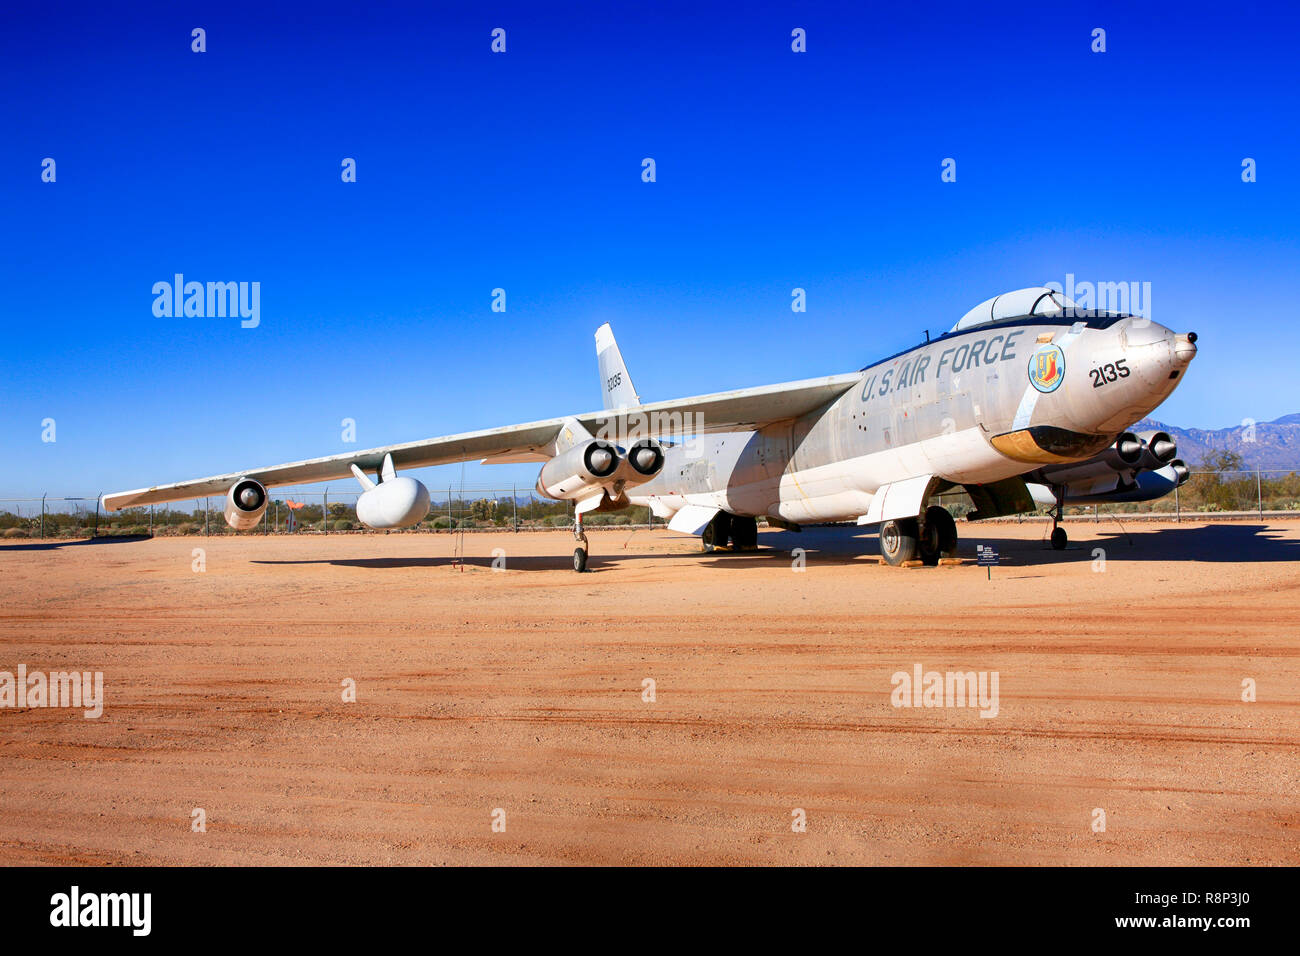 1947 Boeing B-47 Stratojet long-range strategic bomber plane on display at the Pima Air & Space Museum in Tucson, AZ Stock Photo